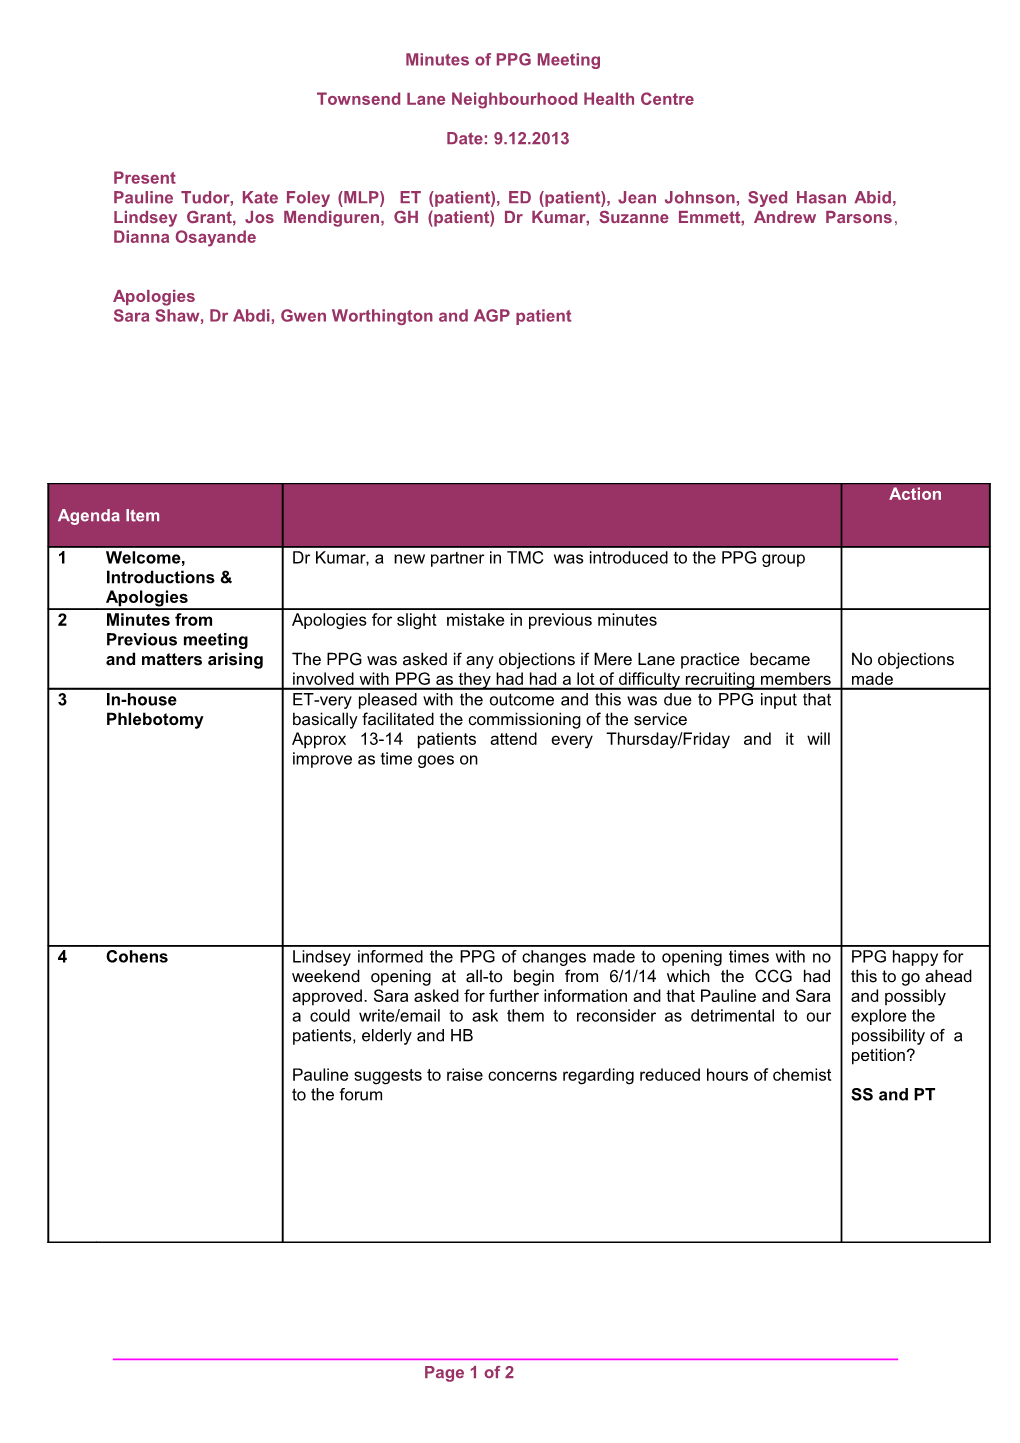 Minutes of the Meeting Liverpool & Sefton Health Partnership Ltd